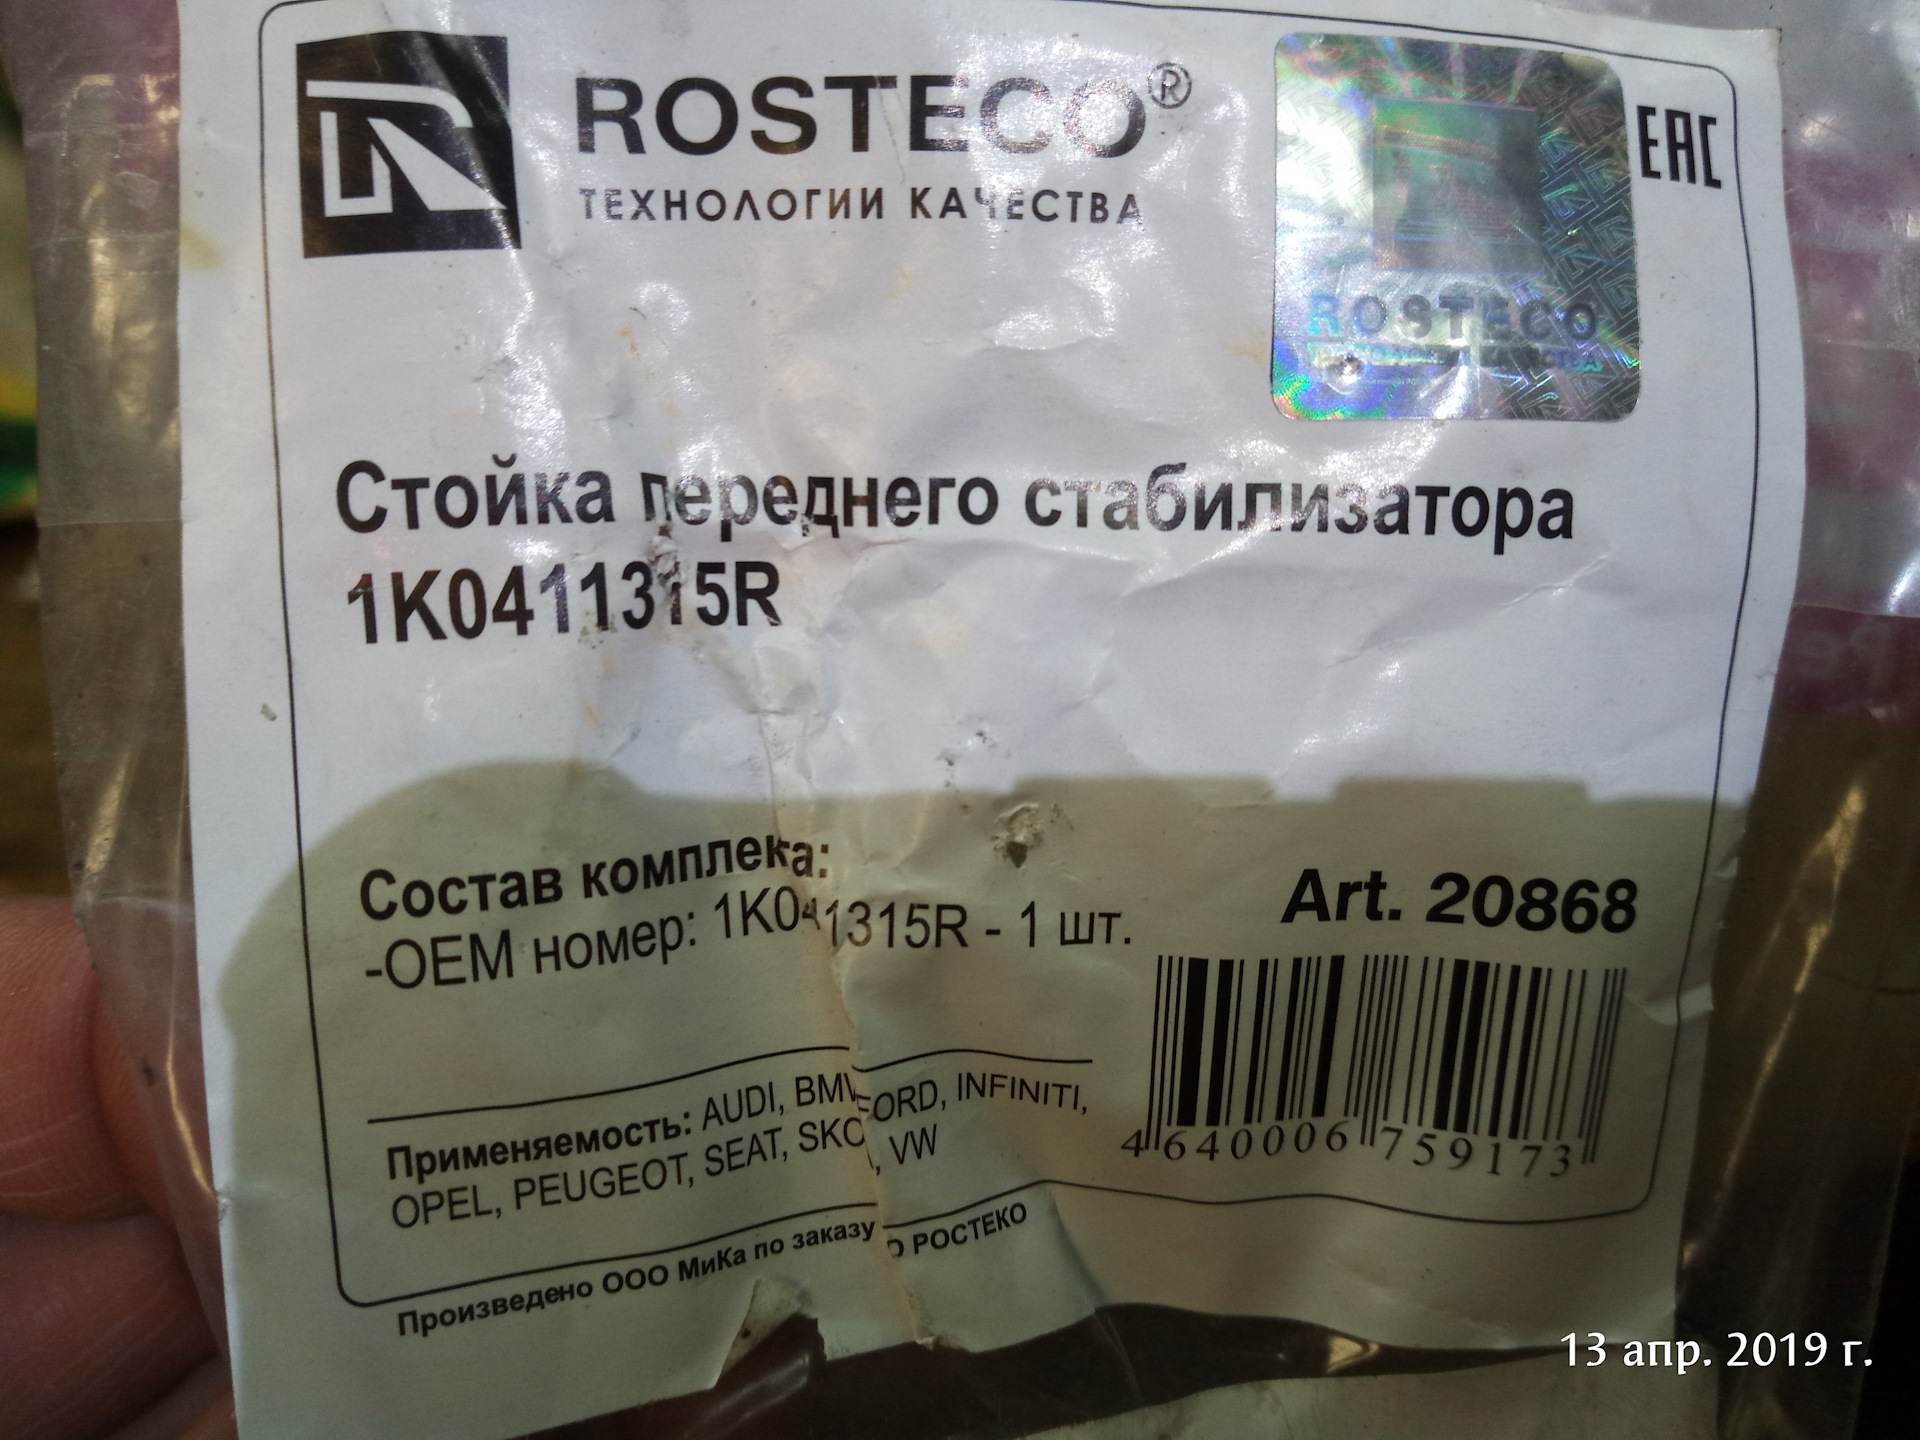 rosteco 20867 стойка переднего стабилизатора с резинометаллическим шарниром